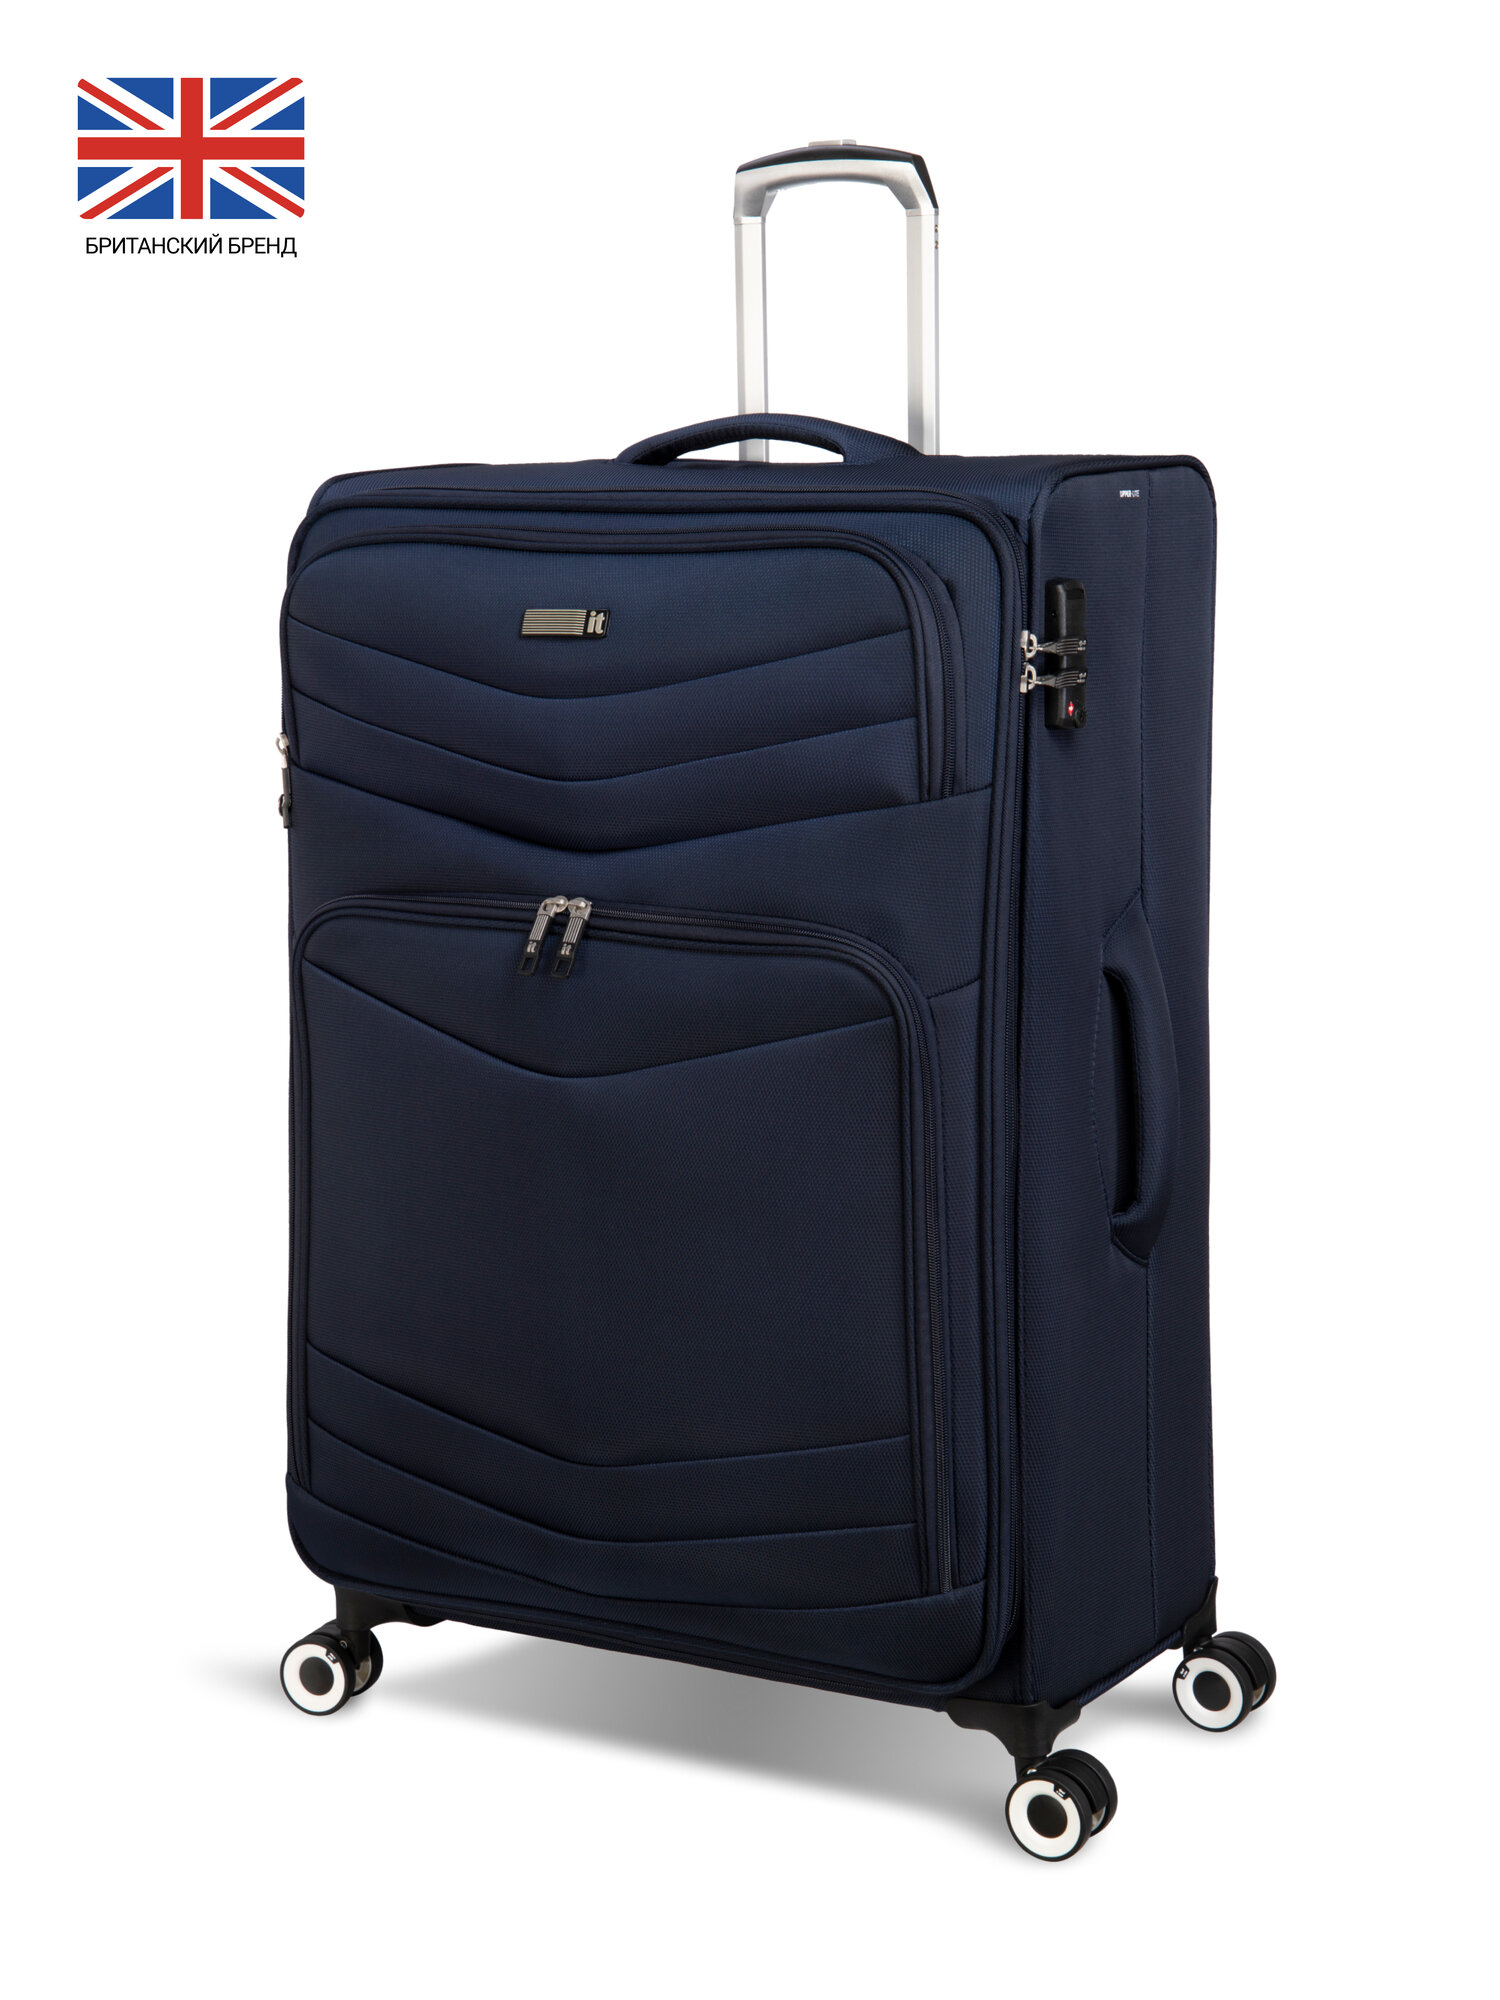 Большой чемодан it luggage, модель Intrepid, размер XL, текстиль, 136 л, 81 см